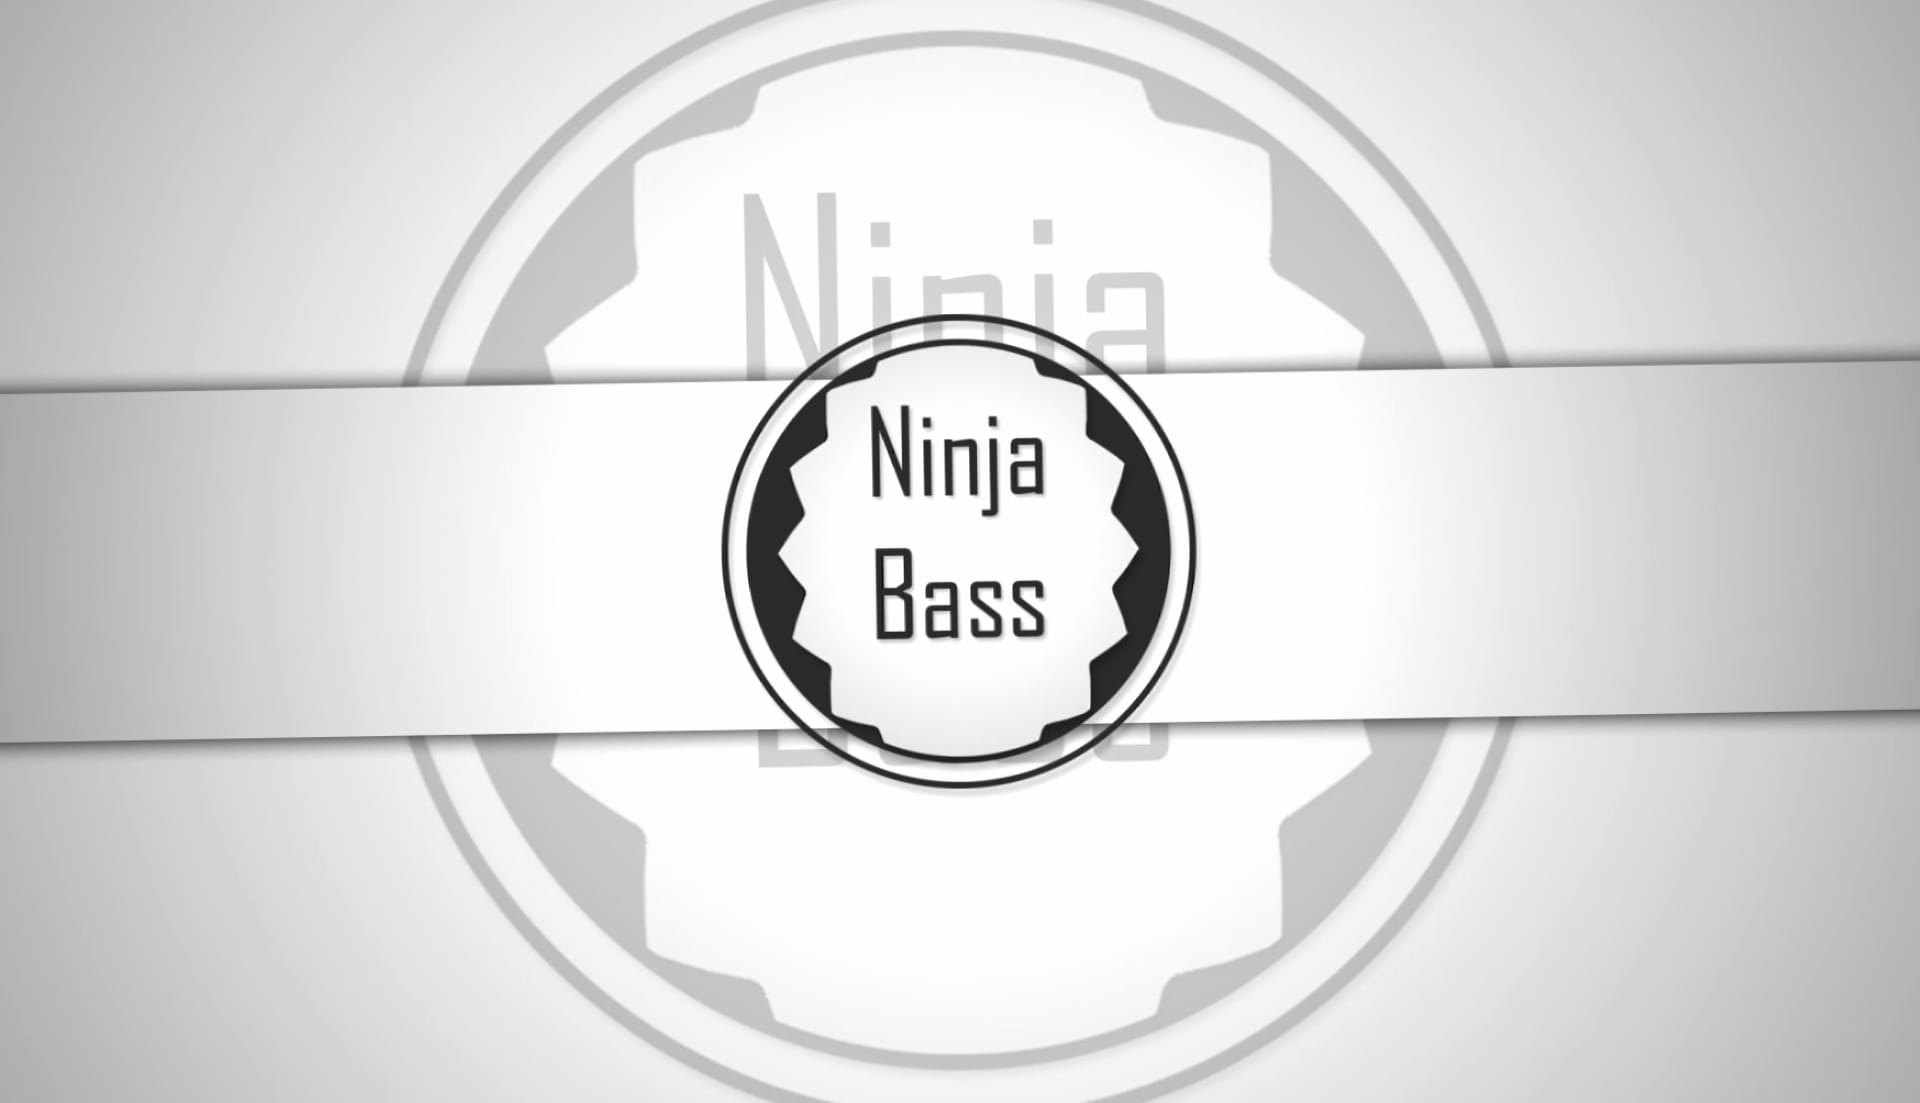 Ninja Bass at 2048 x 2048 iPad size wallpapers HD quality